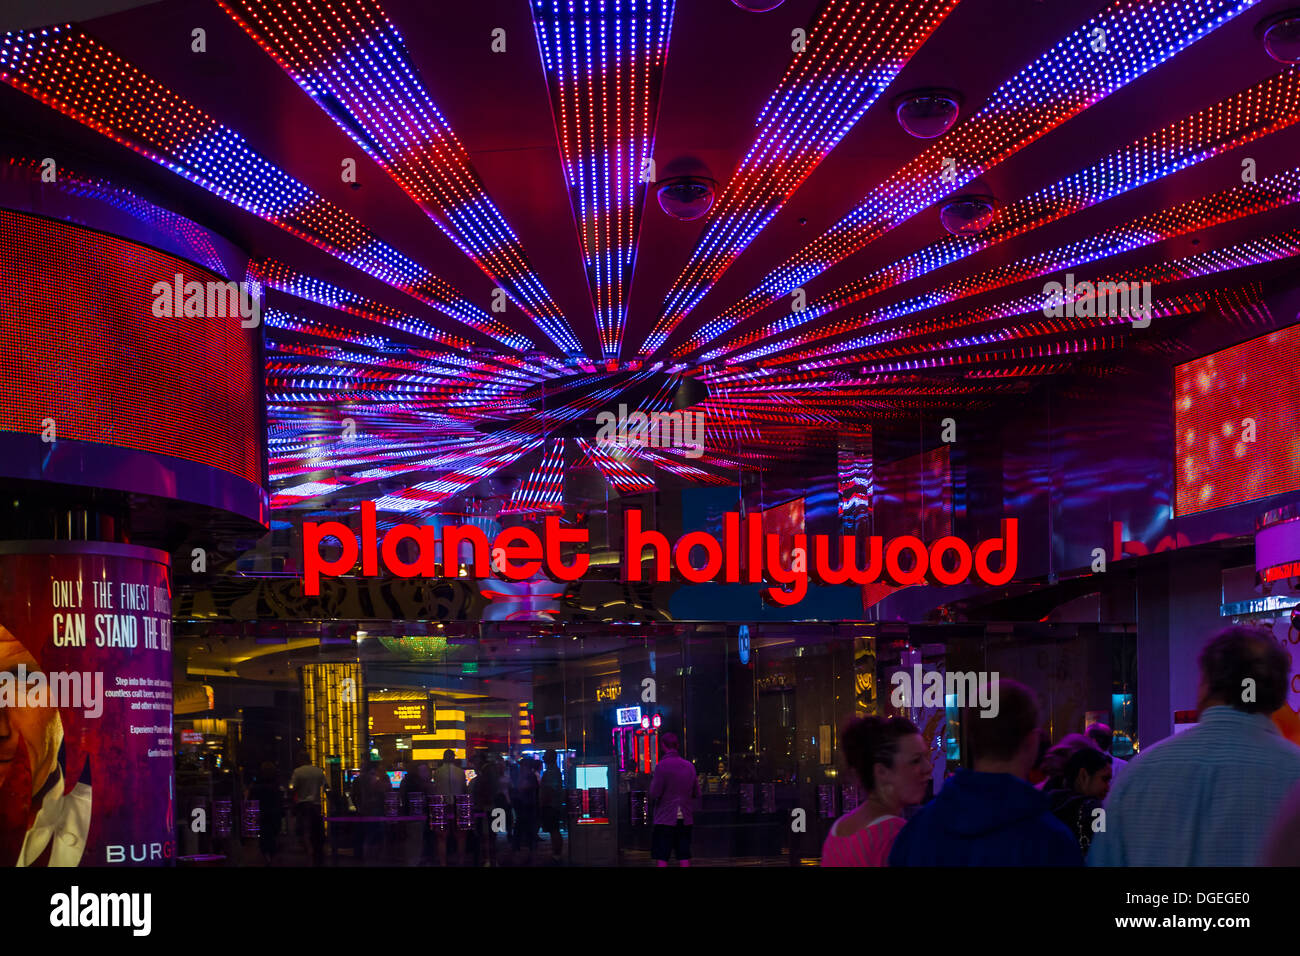 Planet Hollywood 27